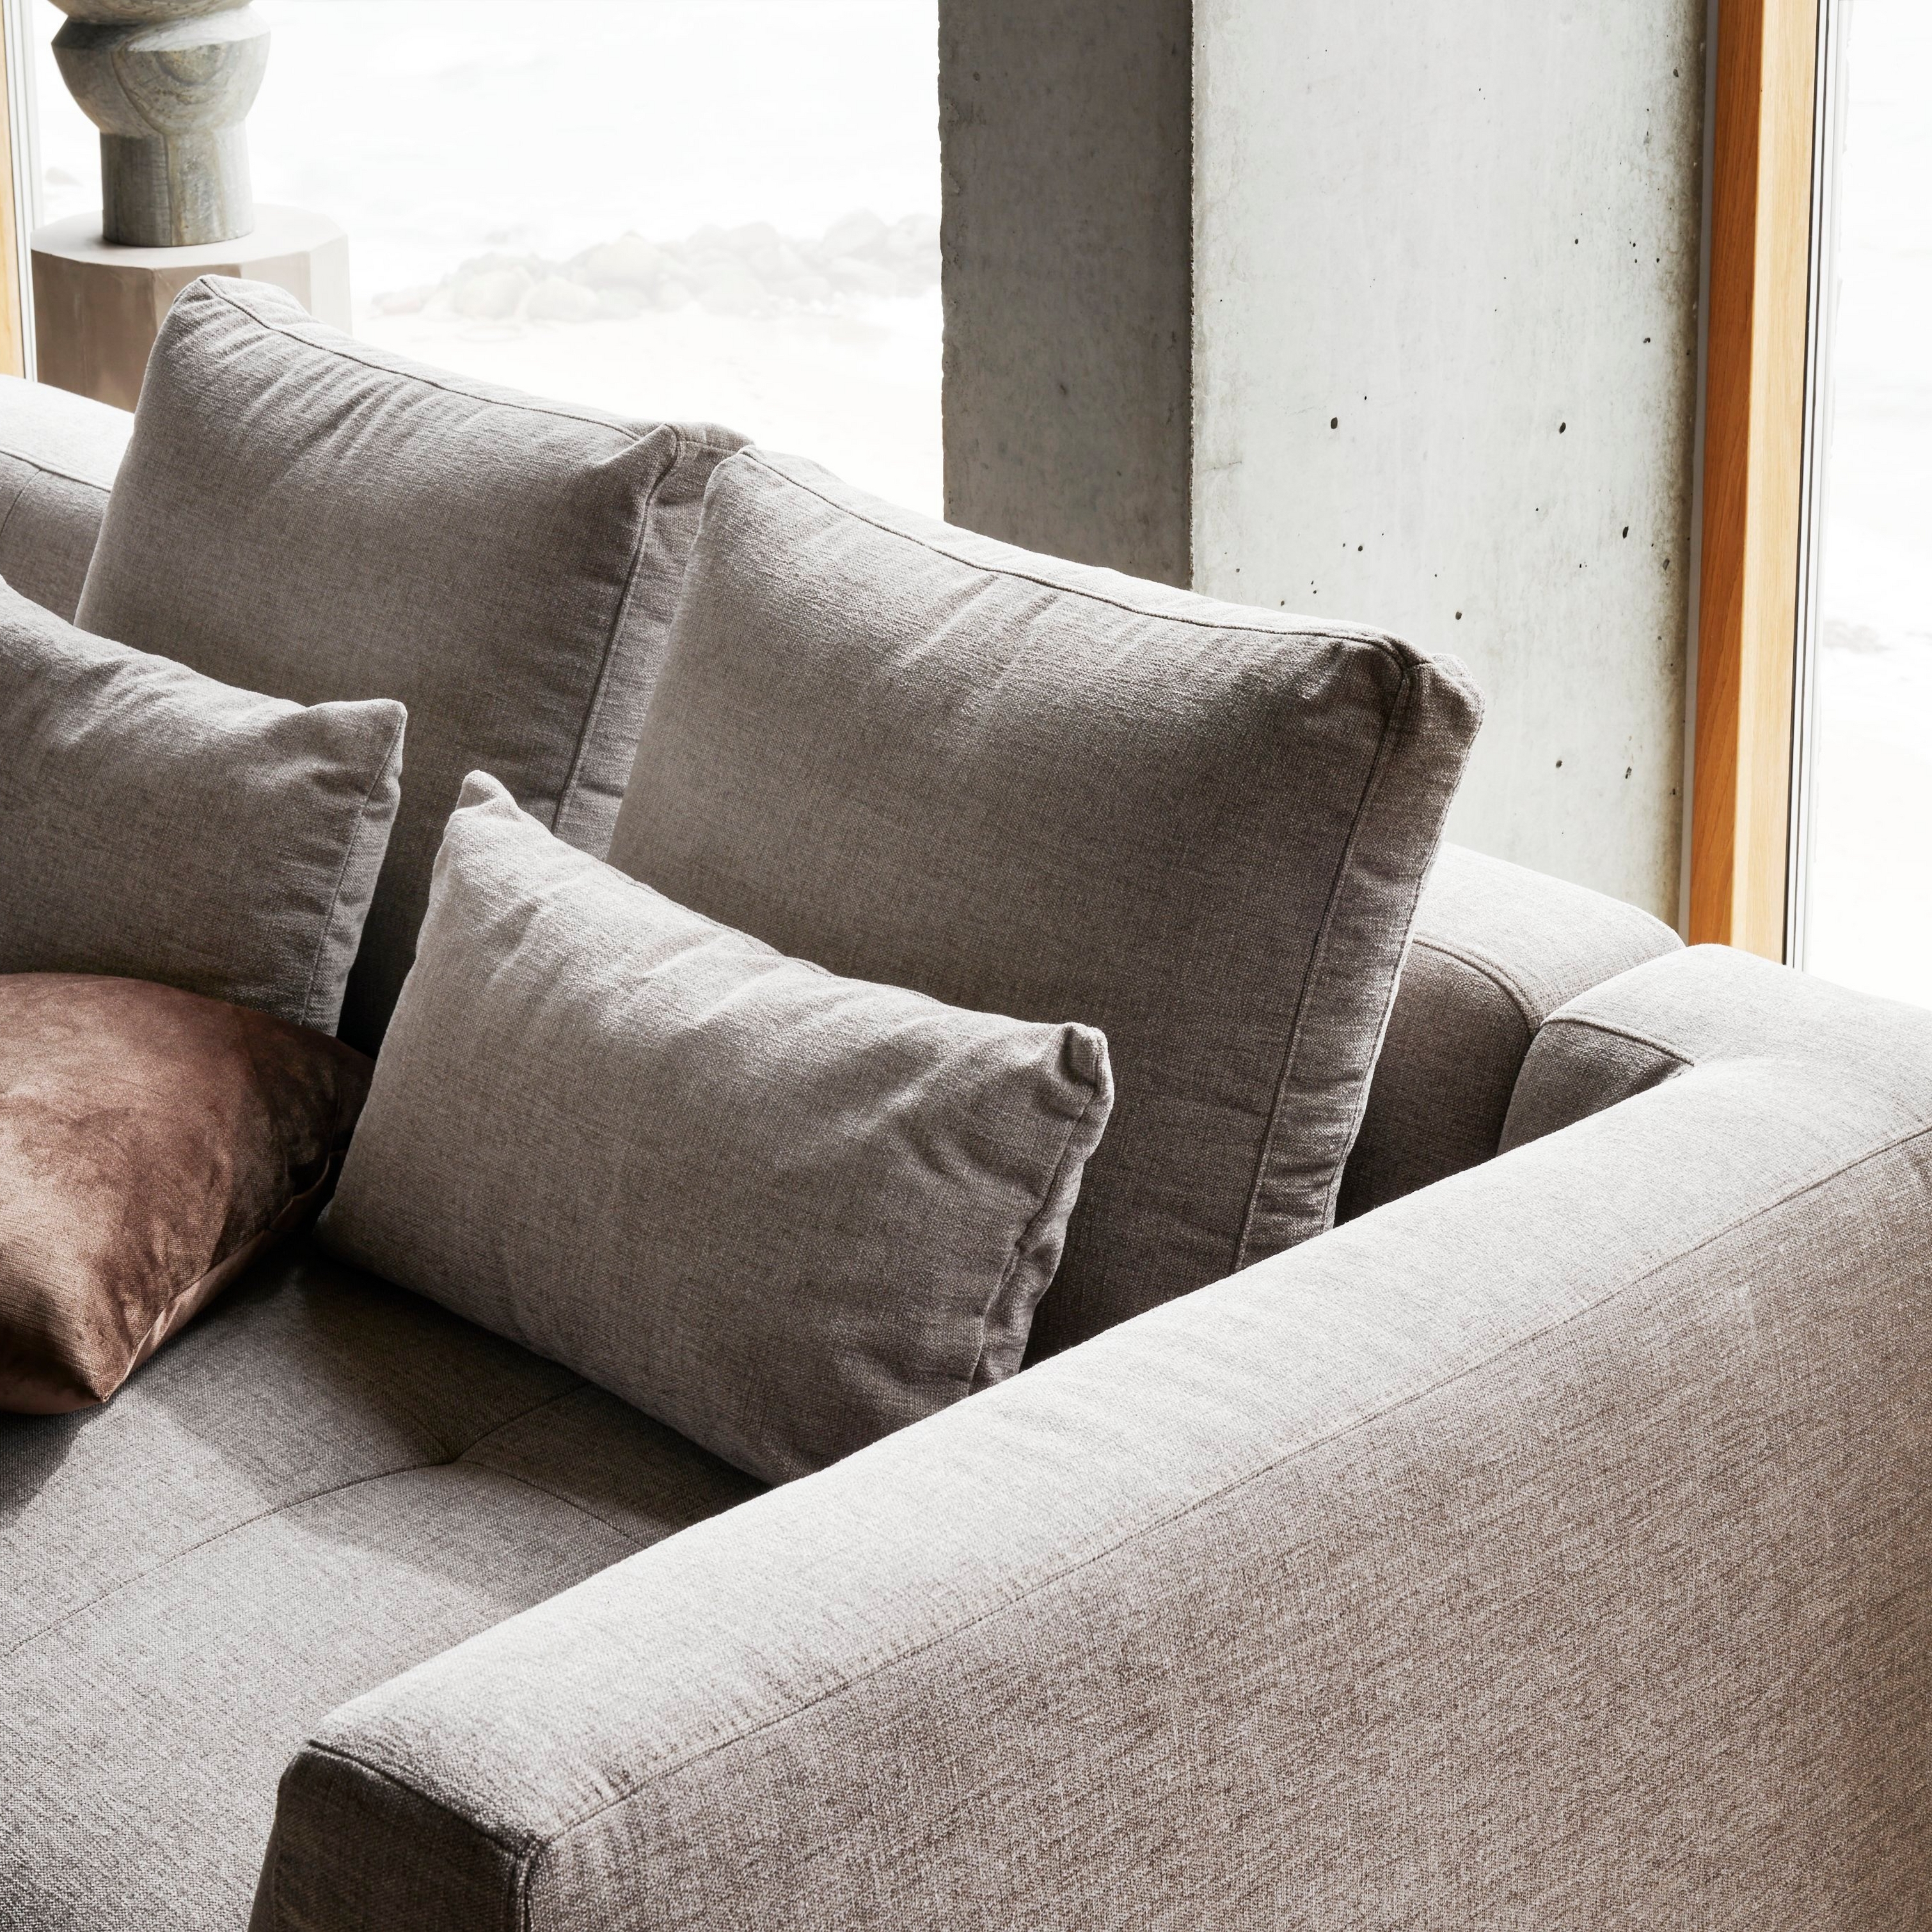 Bergamo Deco cushions displayed on the Bergamo sofa